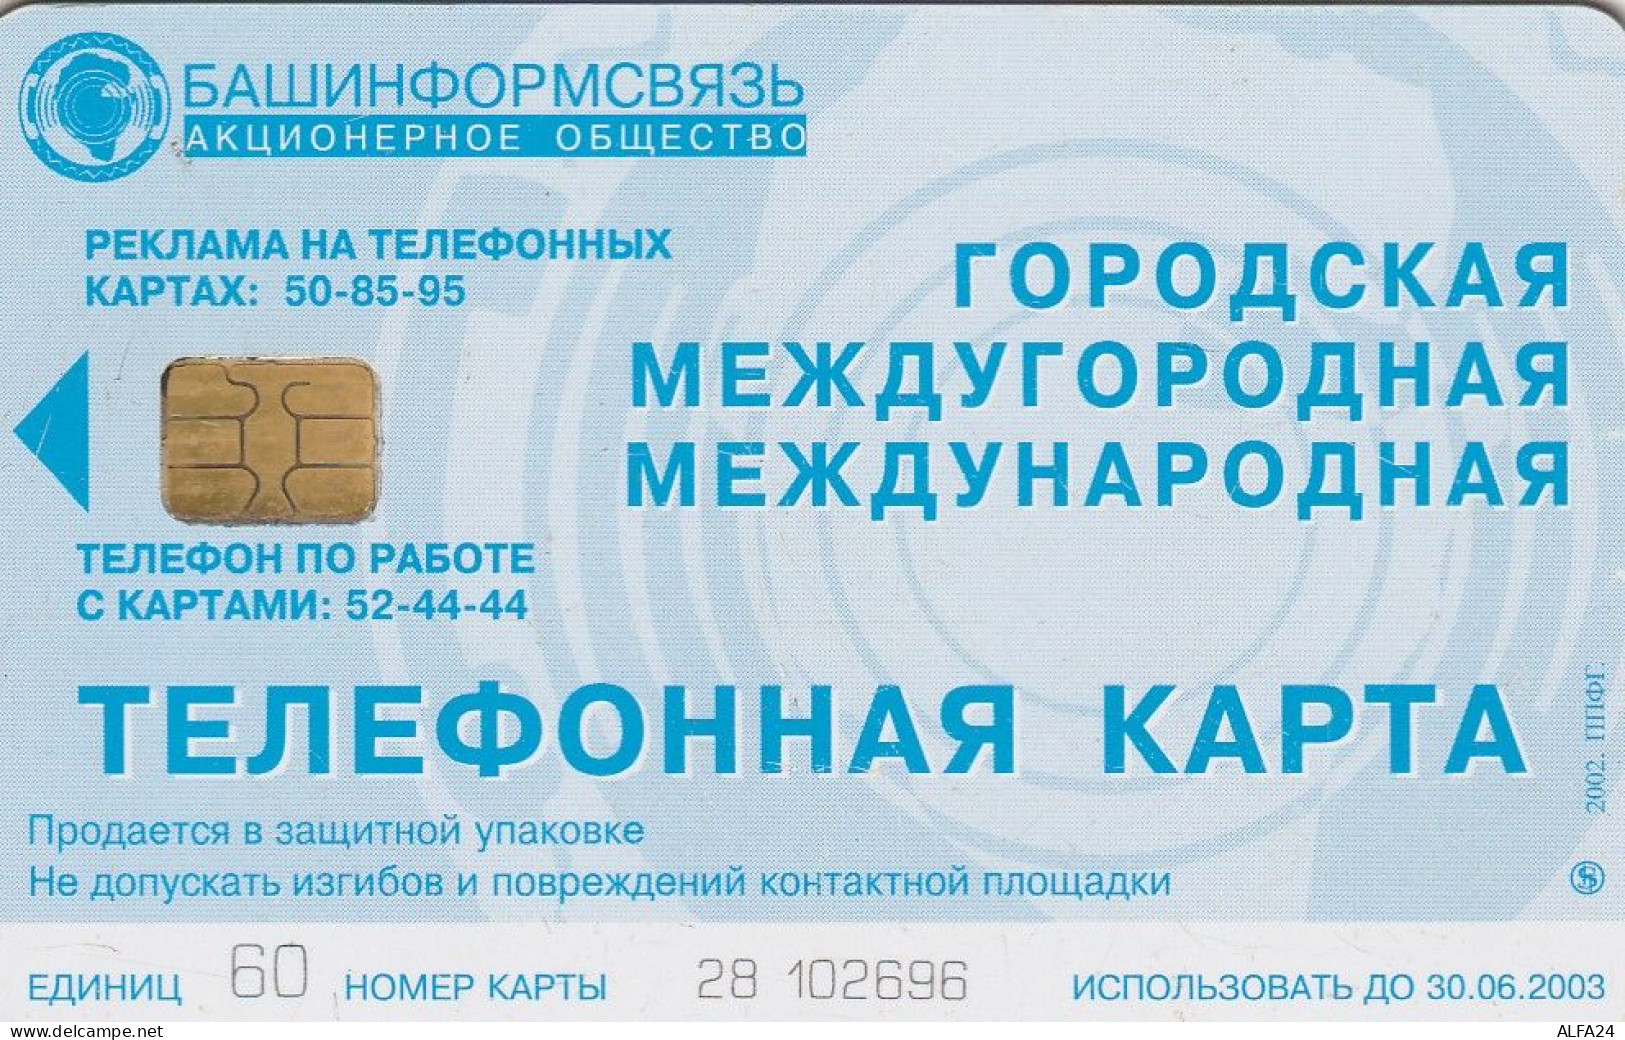 PHONE CARD RUSSIA Bashinformsvyaz - Ufa (E9.17.5 - Russland